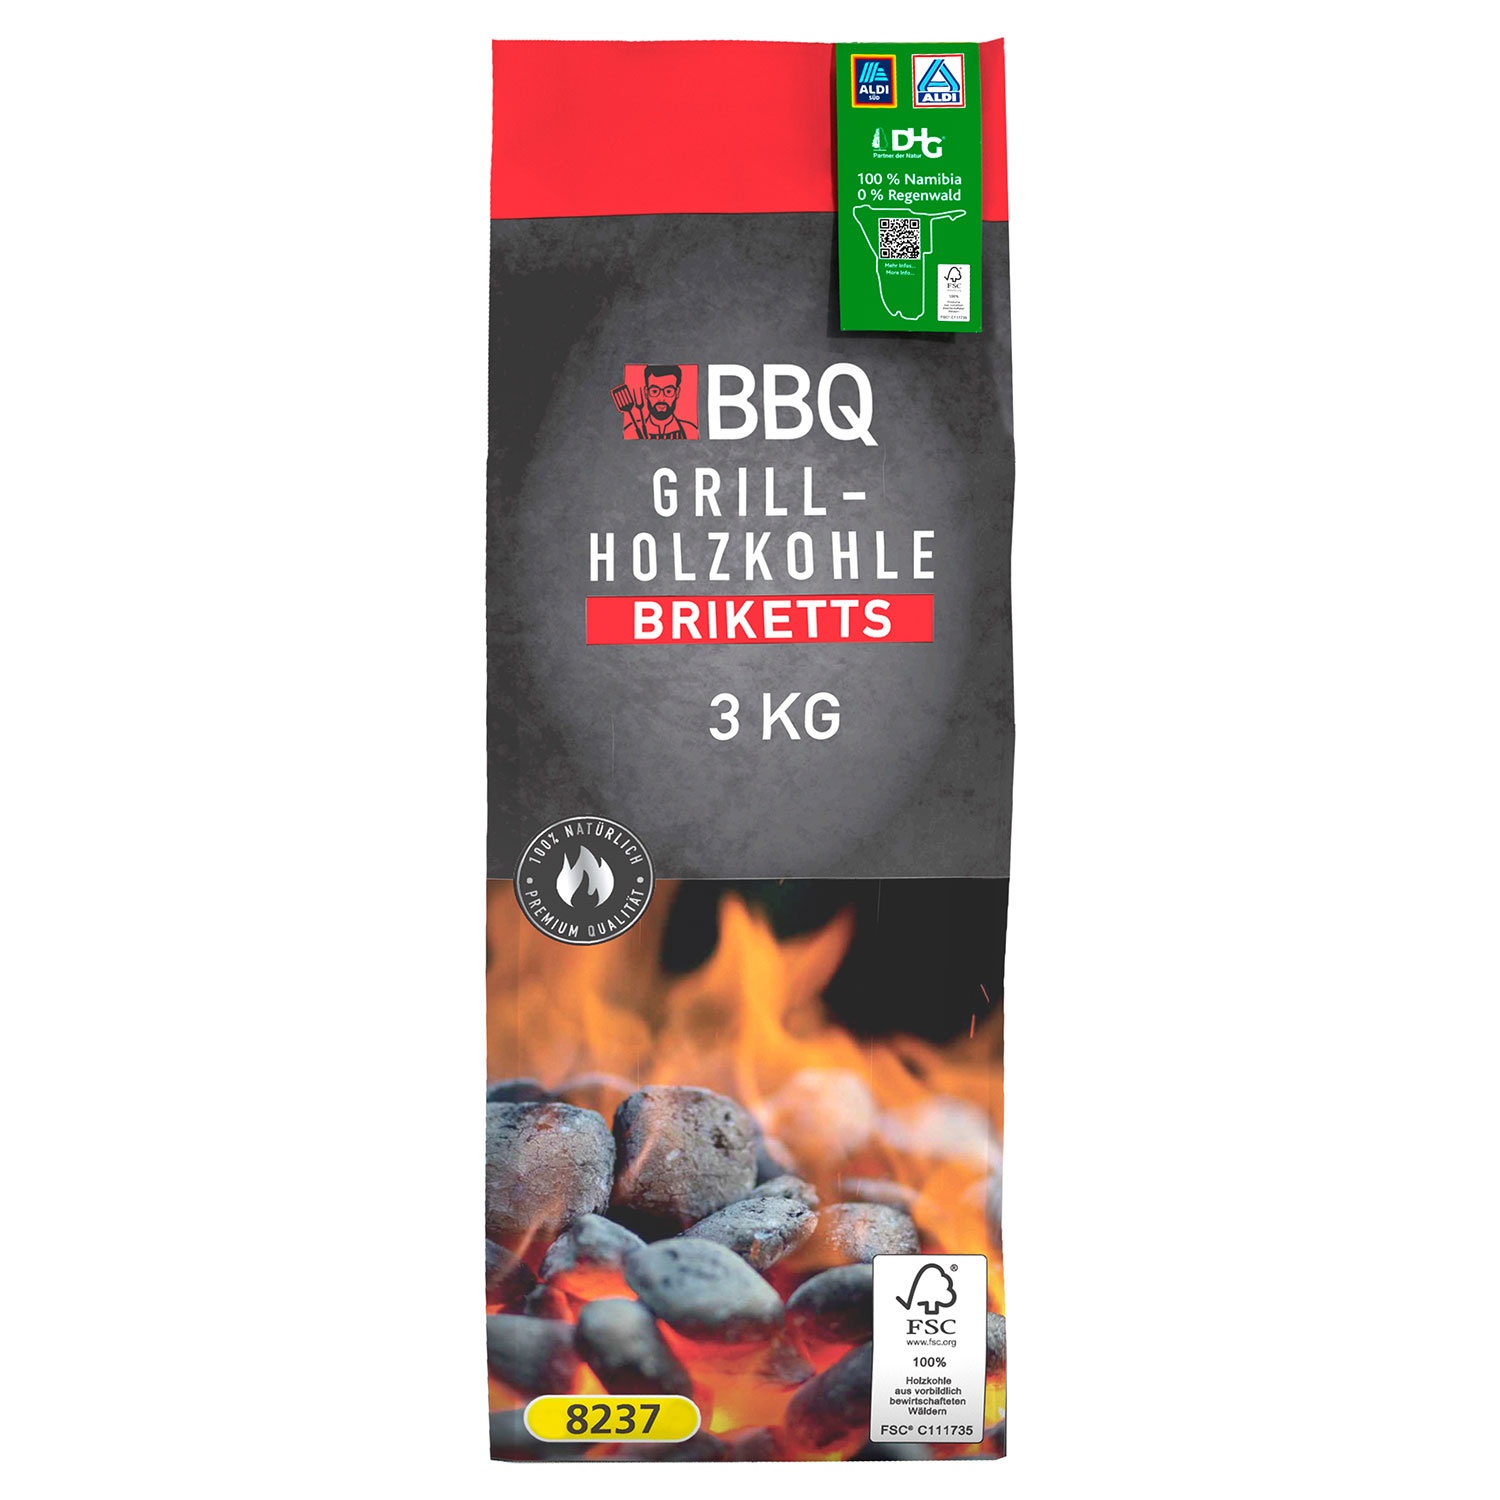 BBQ Grill-Holzkohle-Briketts 3 kg